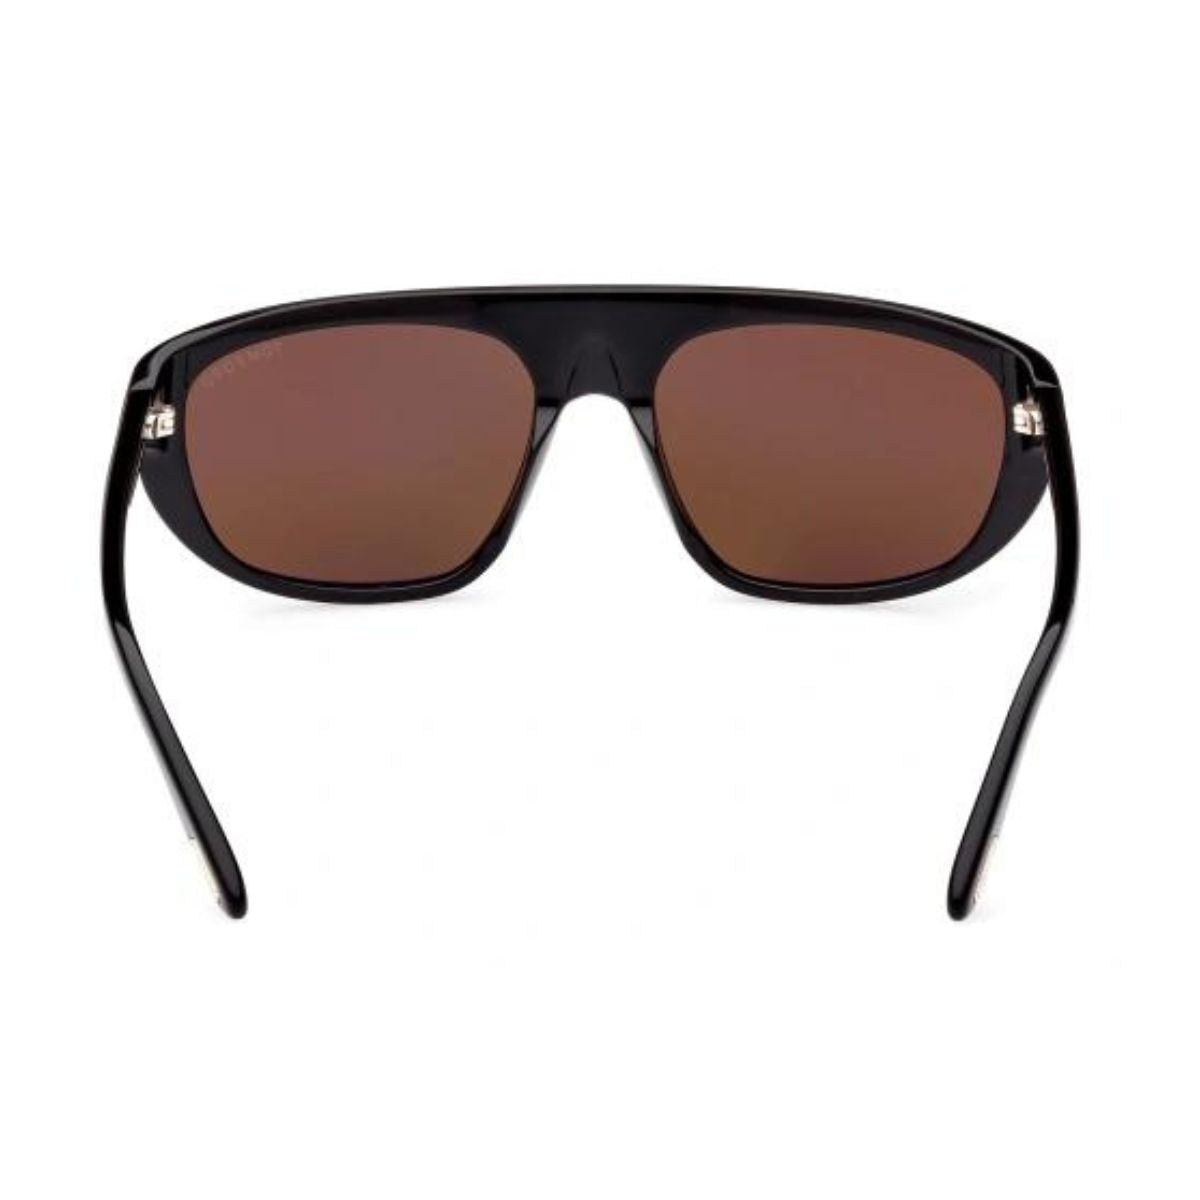 "Latest Tom Ford Aviator Sunglasses For Mens At Optorium"